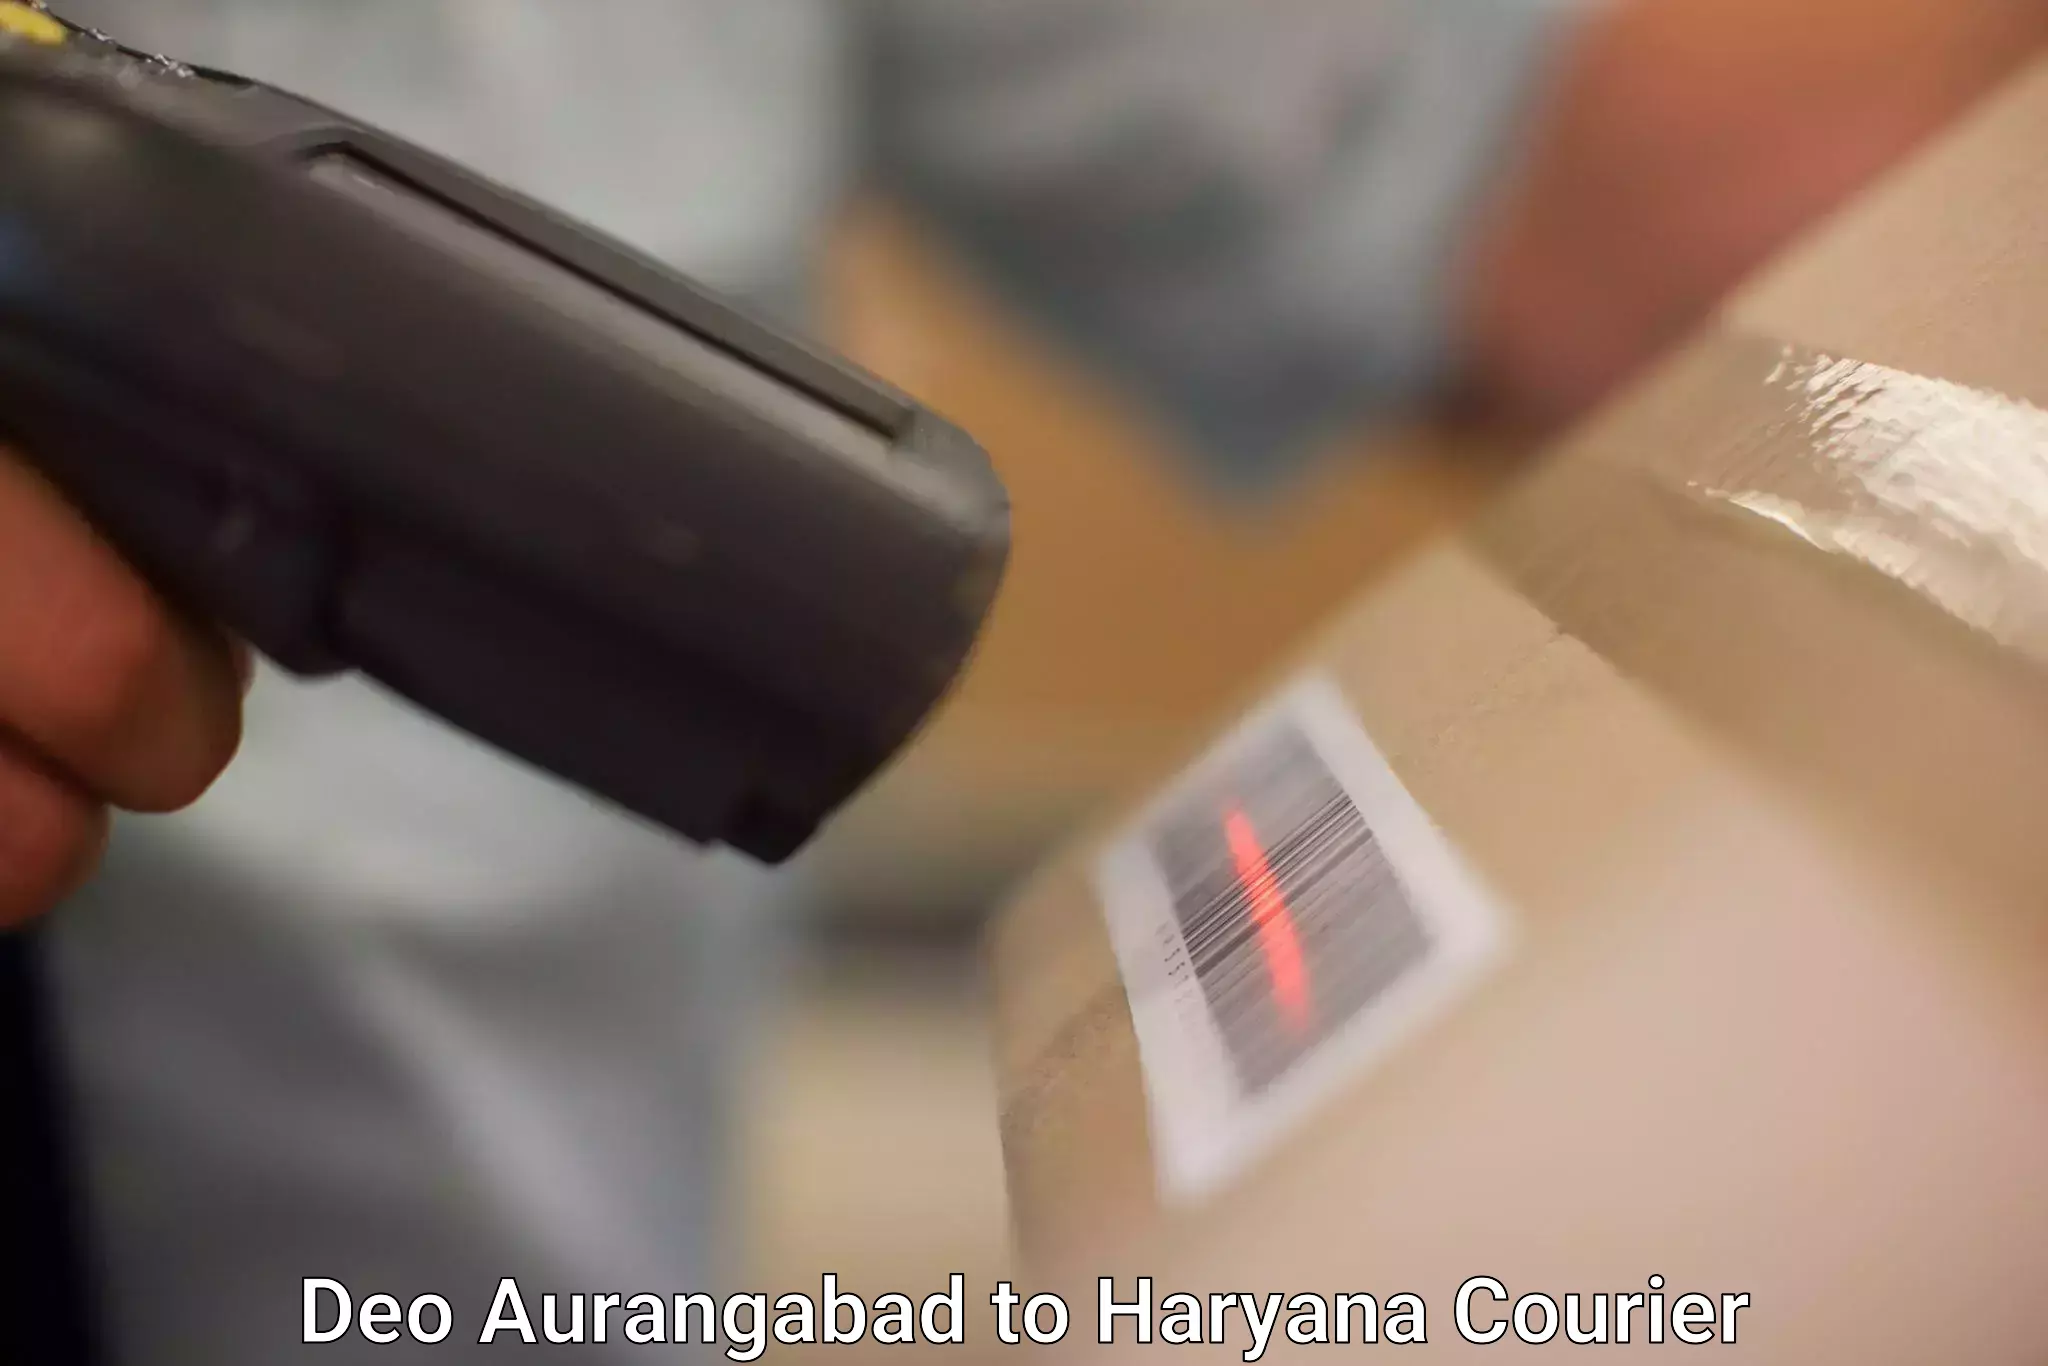 Pharmaceutical courier Deo Aurangabad to Bilaspur Haryana